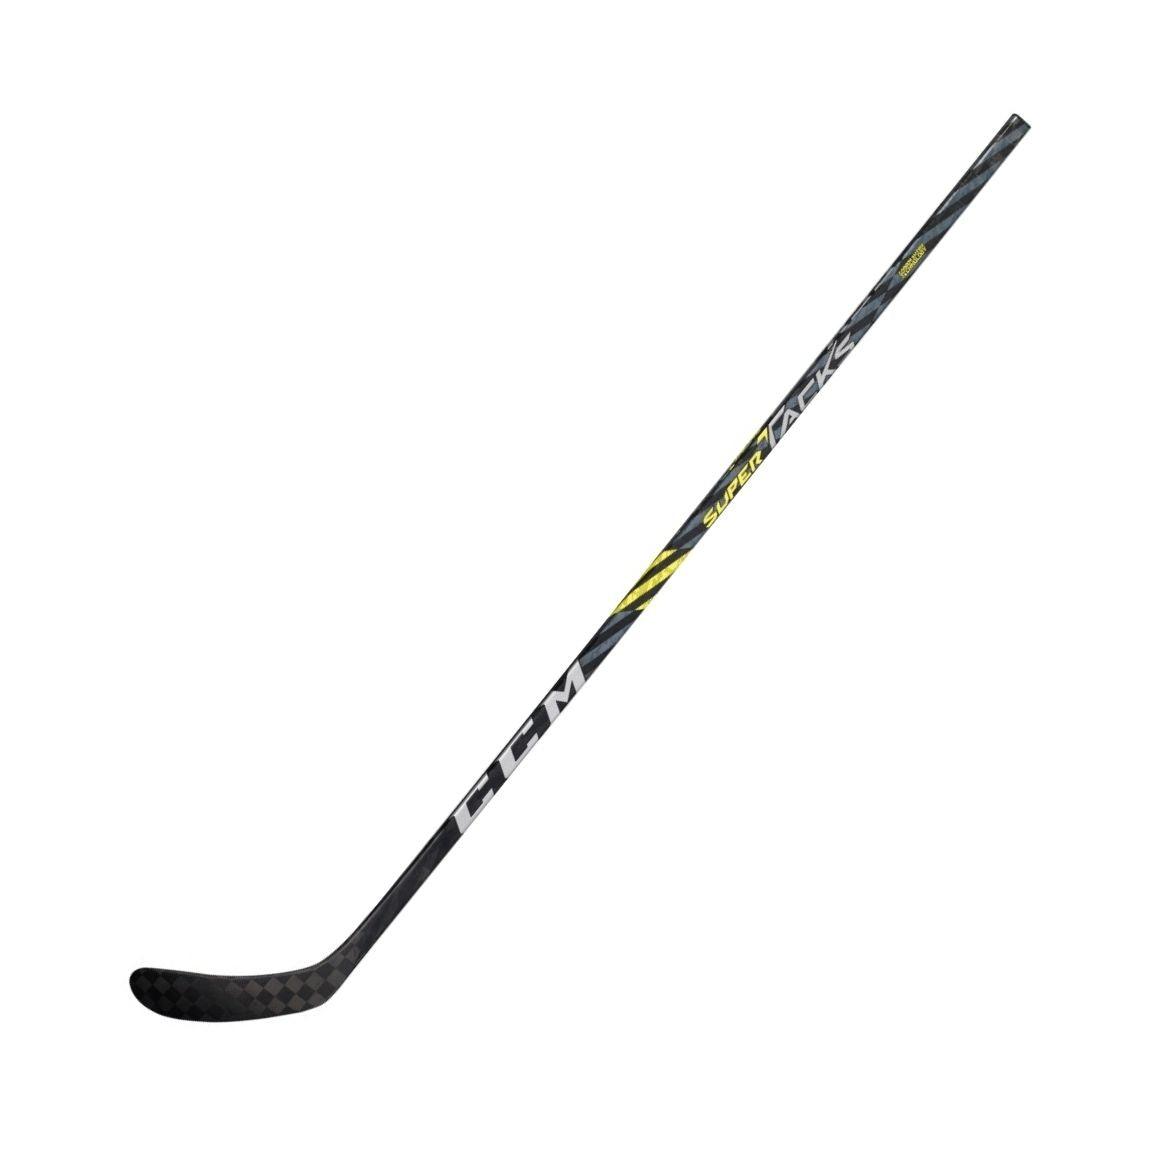 Super Tacks AS4 Hockey Stick - Senior - Sports Excellence